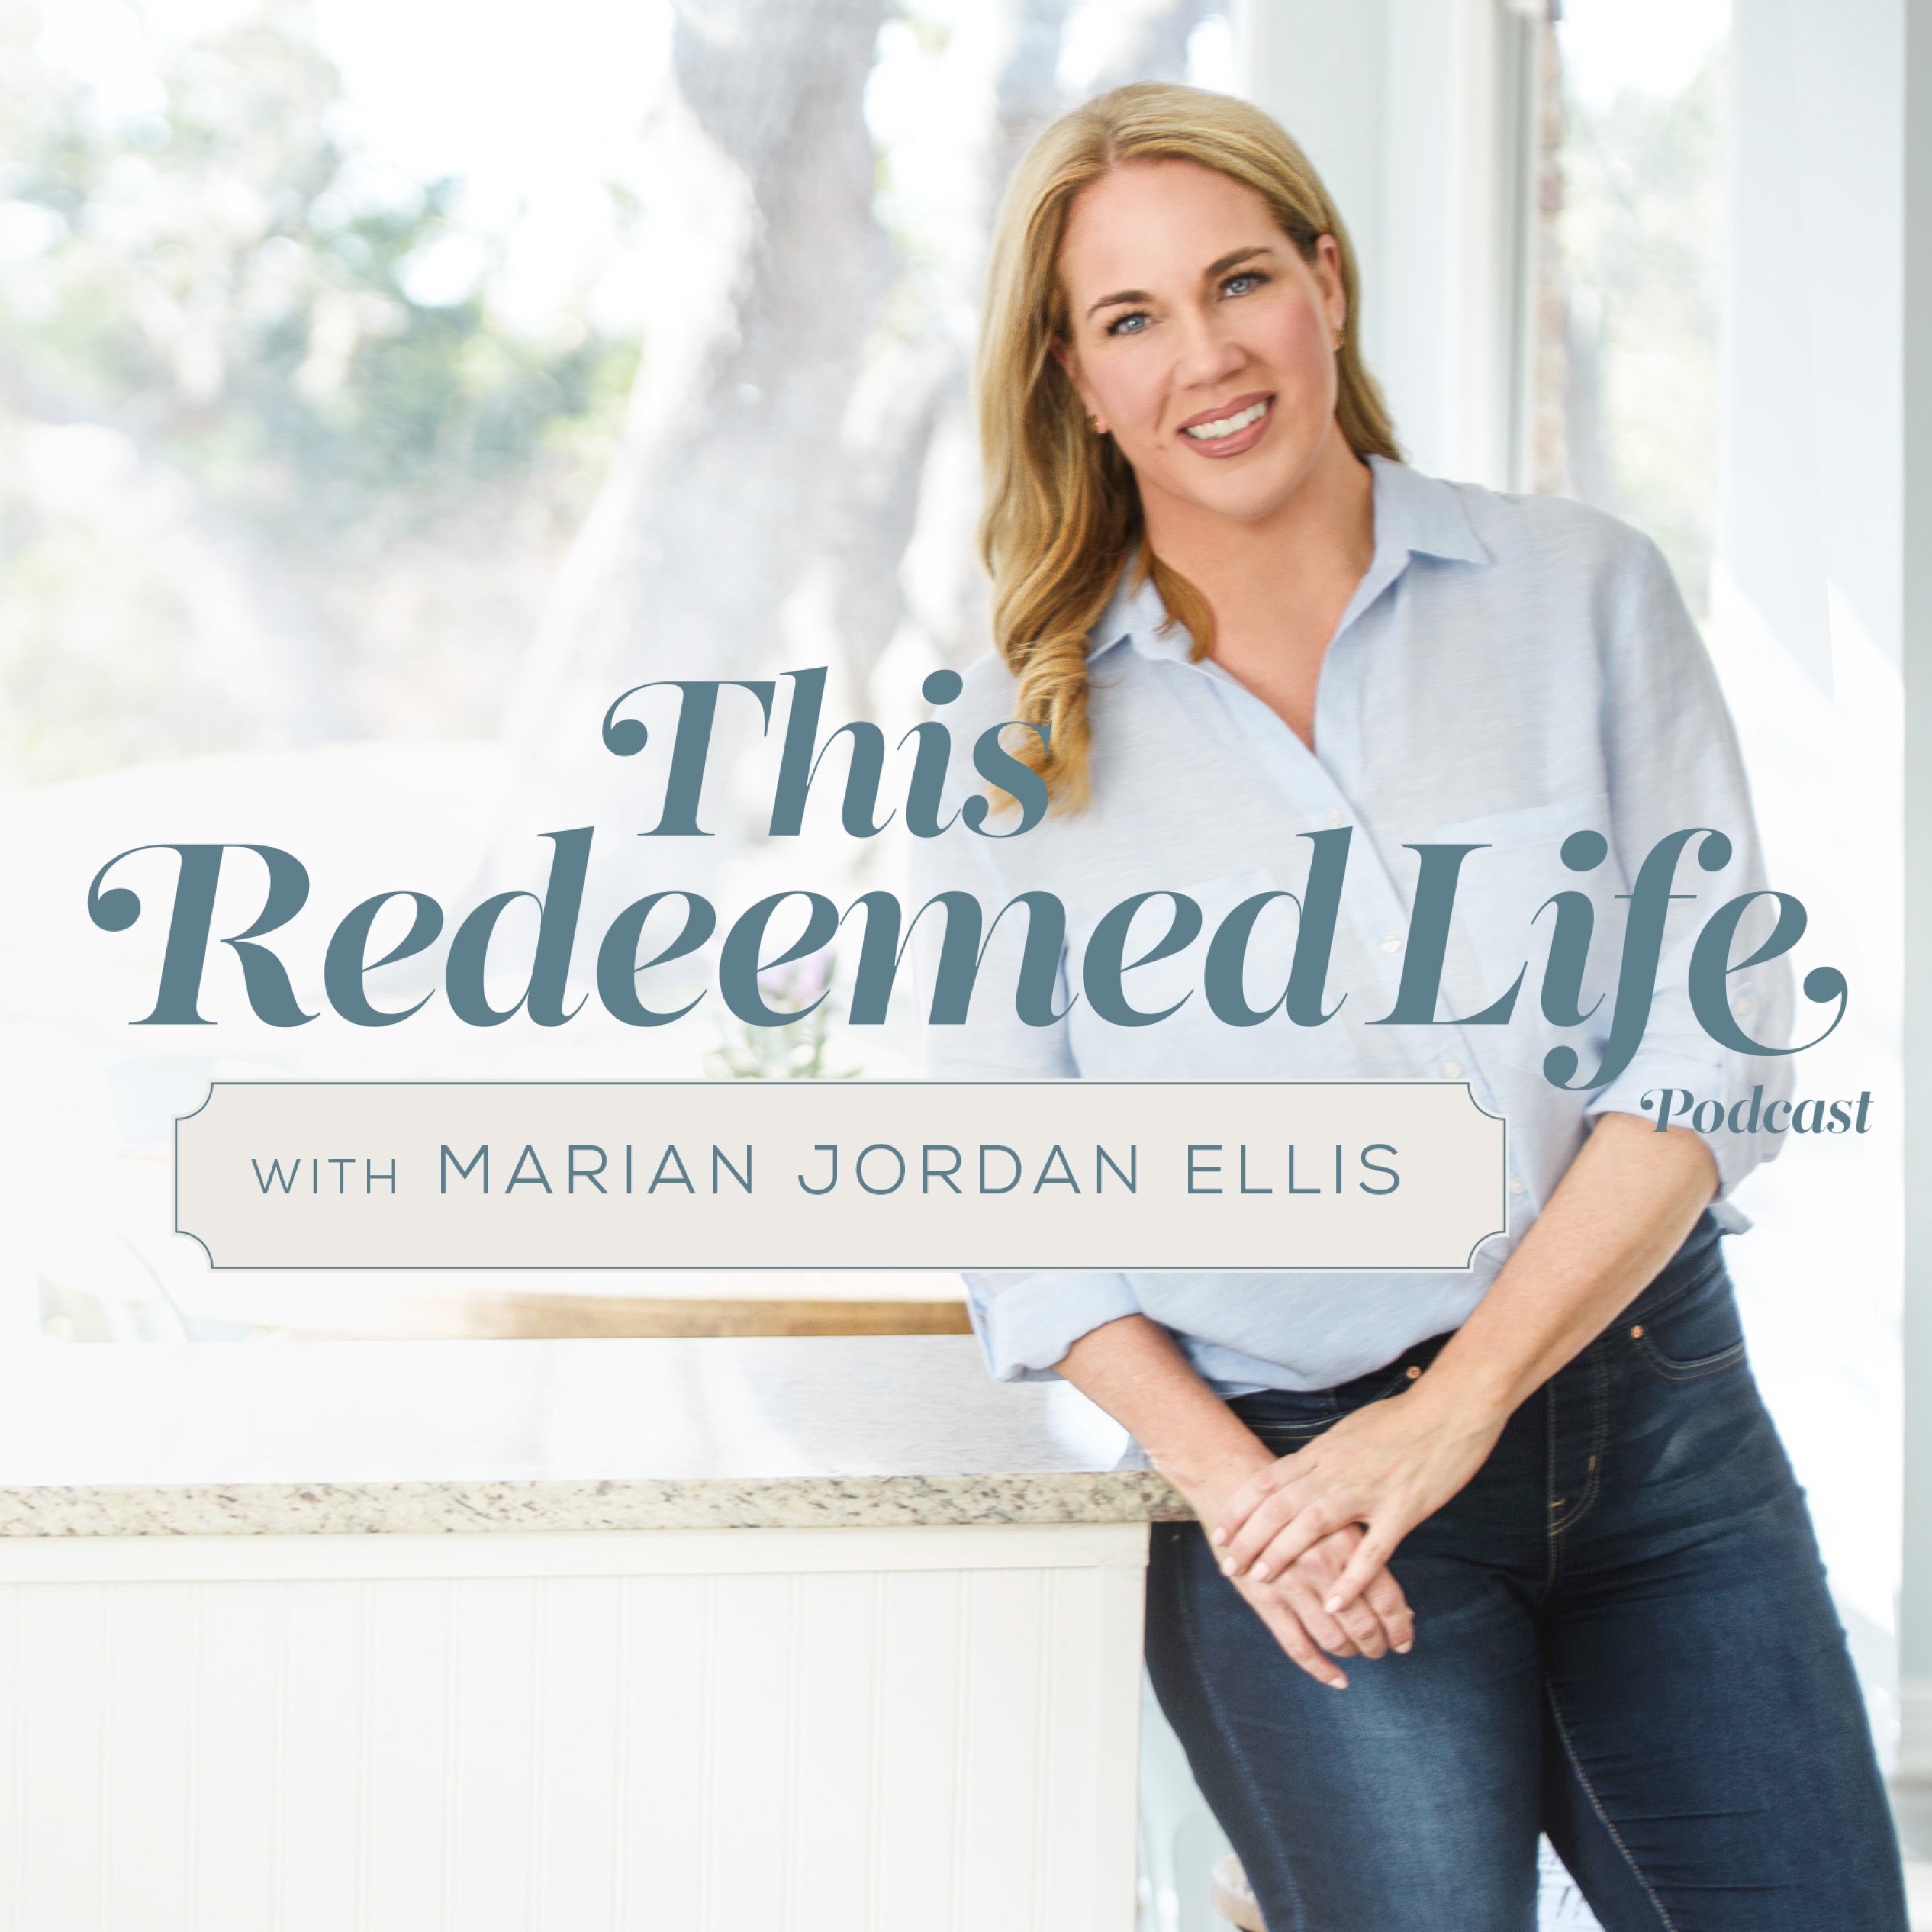 This Redeemed Life with Marian Jordan Ellis